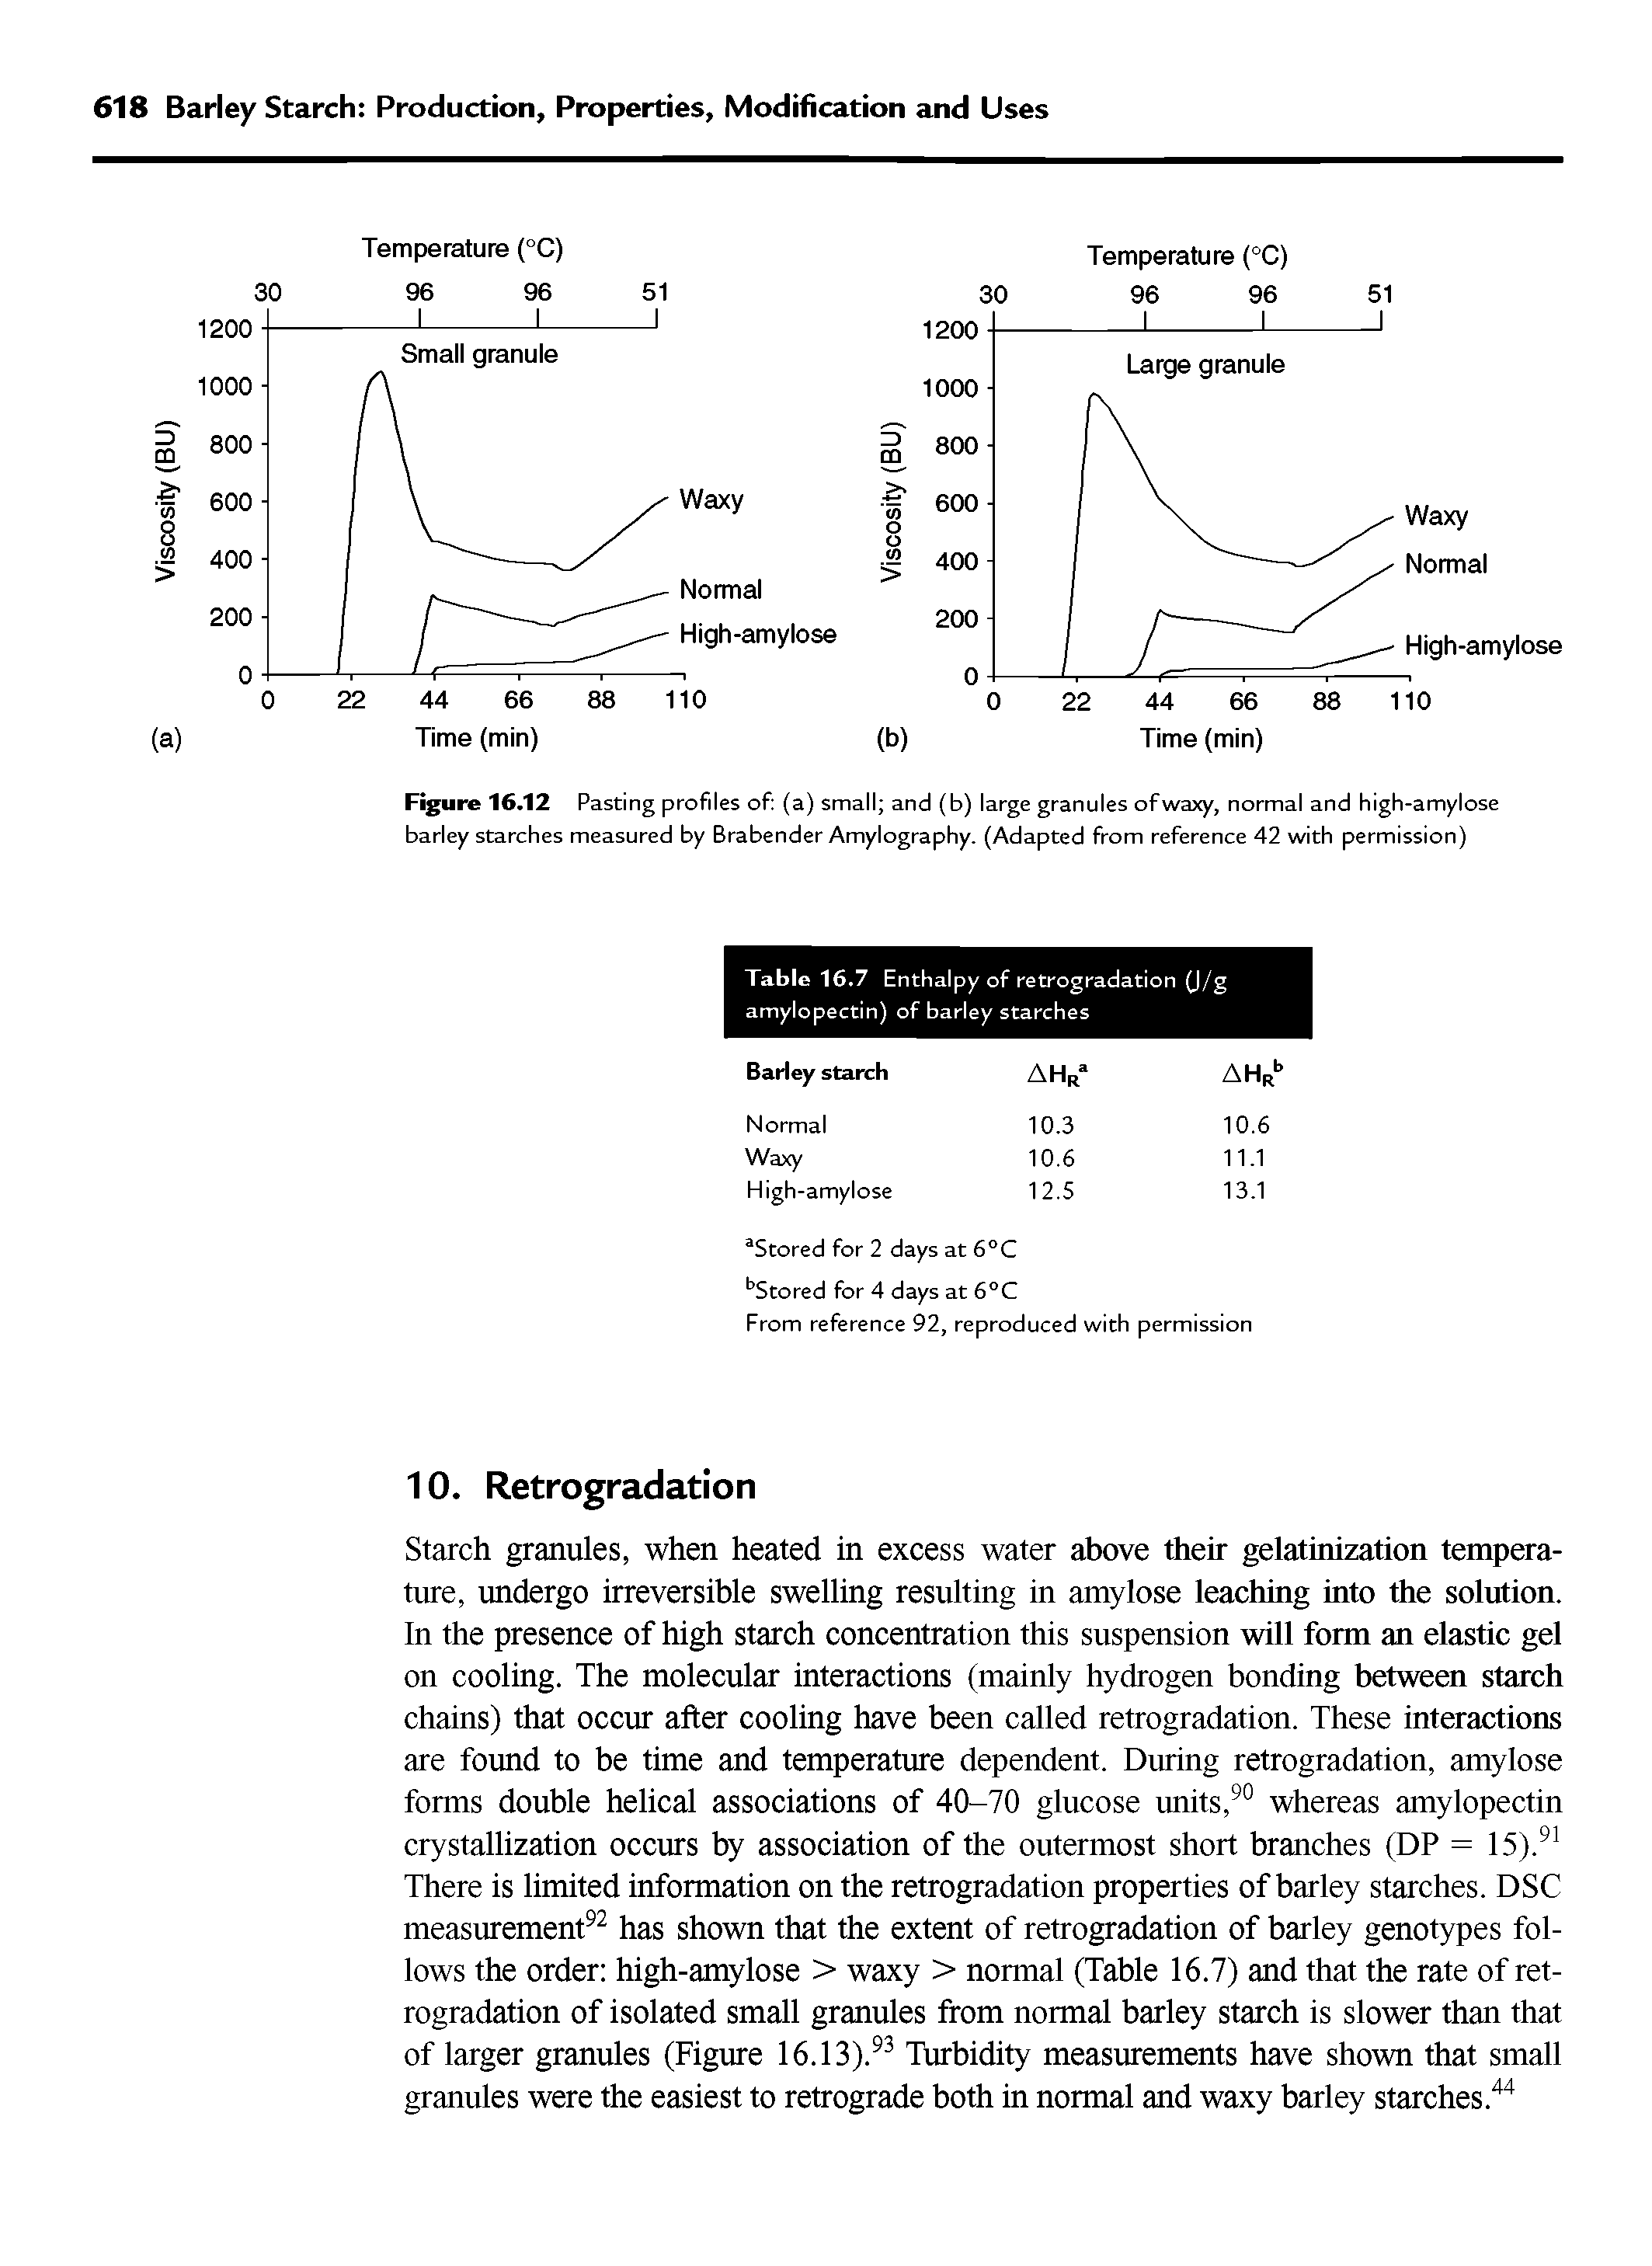 Table 16.7 Enthalpy of retrogradation (J/g amylopectin) of barley starches...